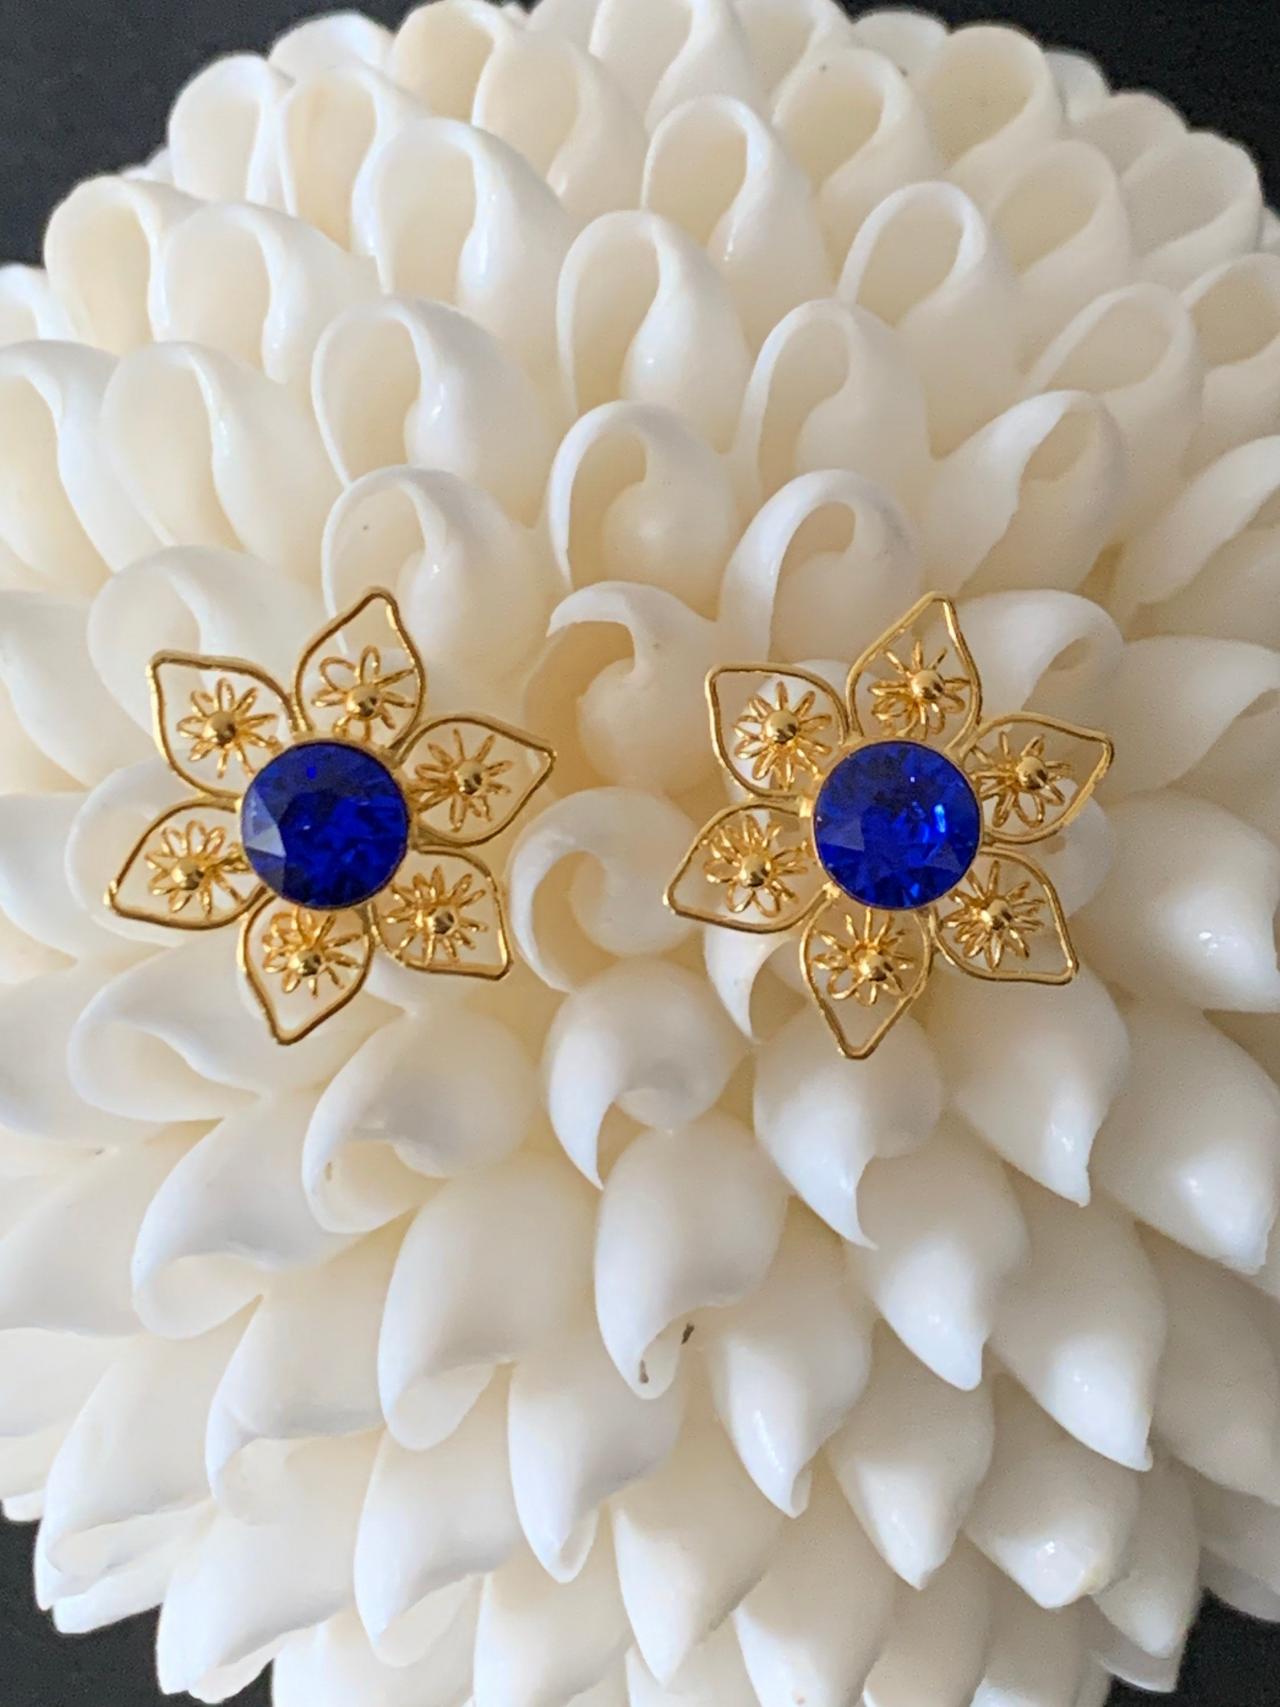 Handmade filigree earrings 24k gold plated blue Swarovski crystal